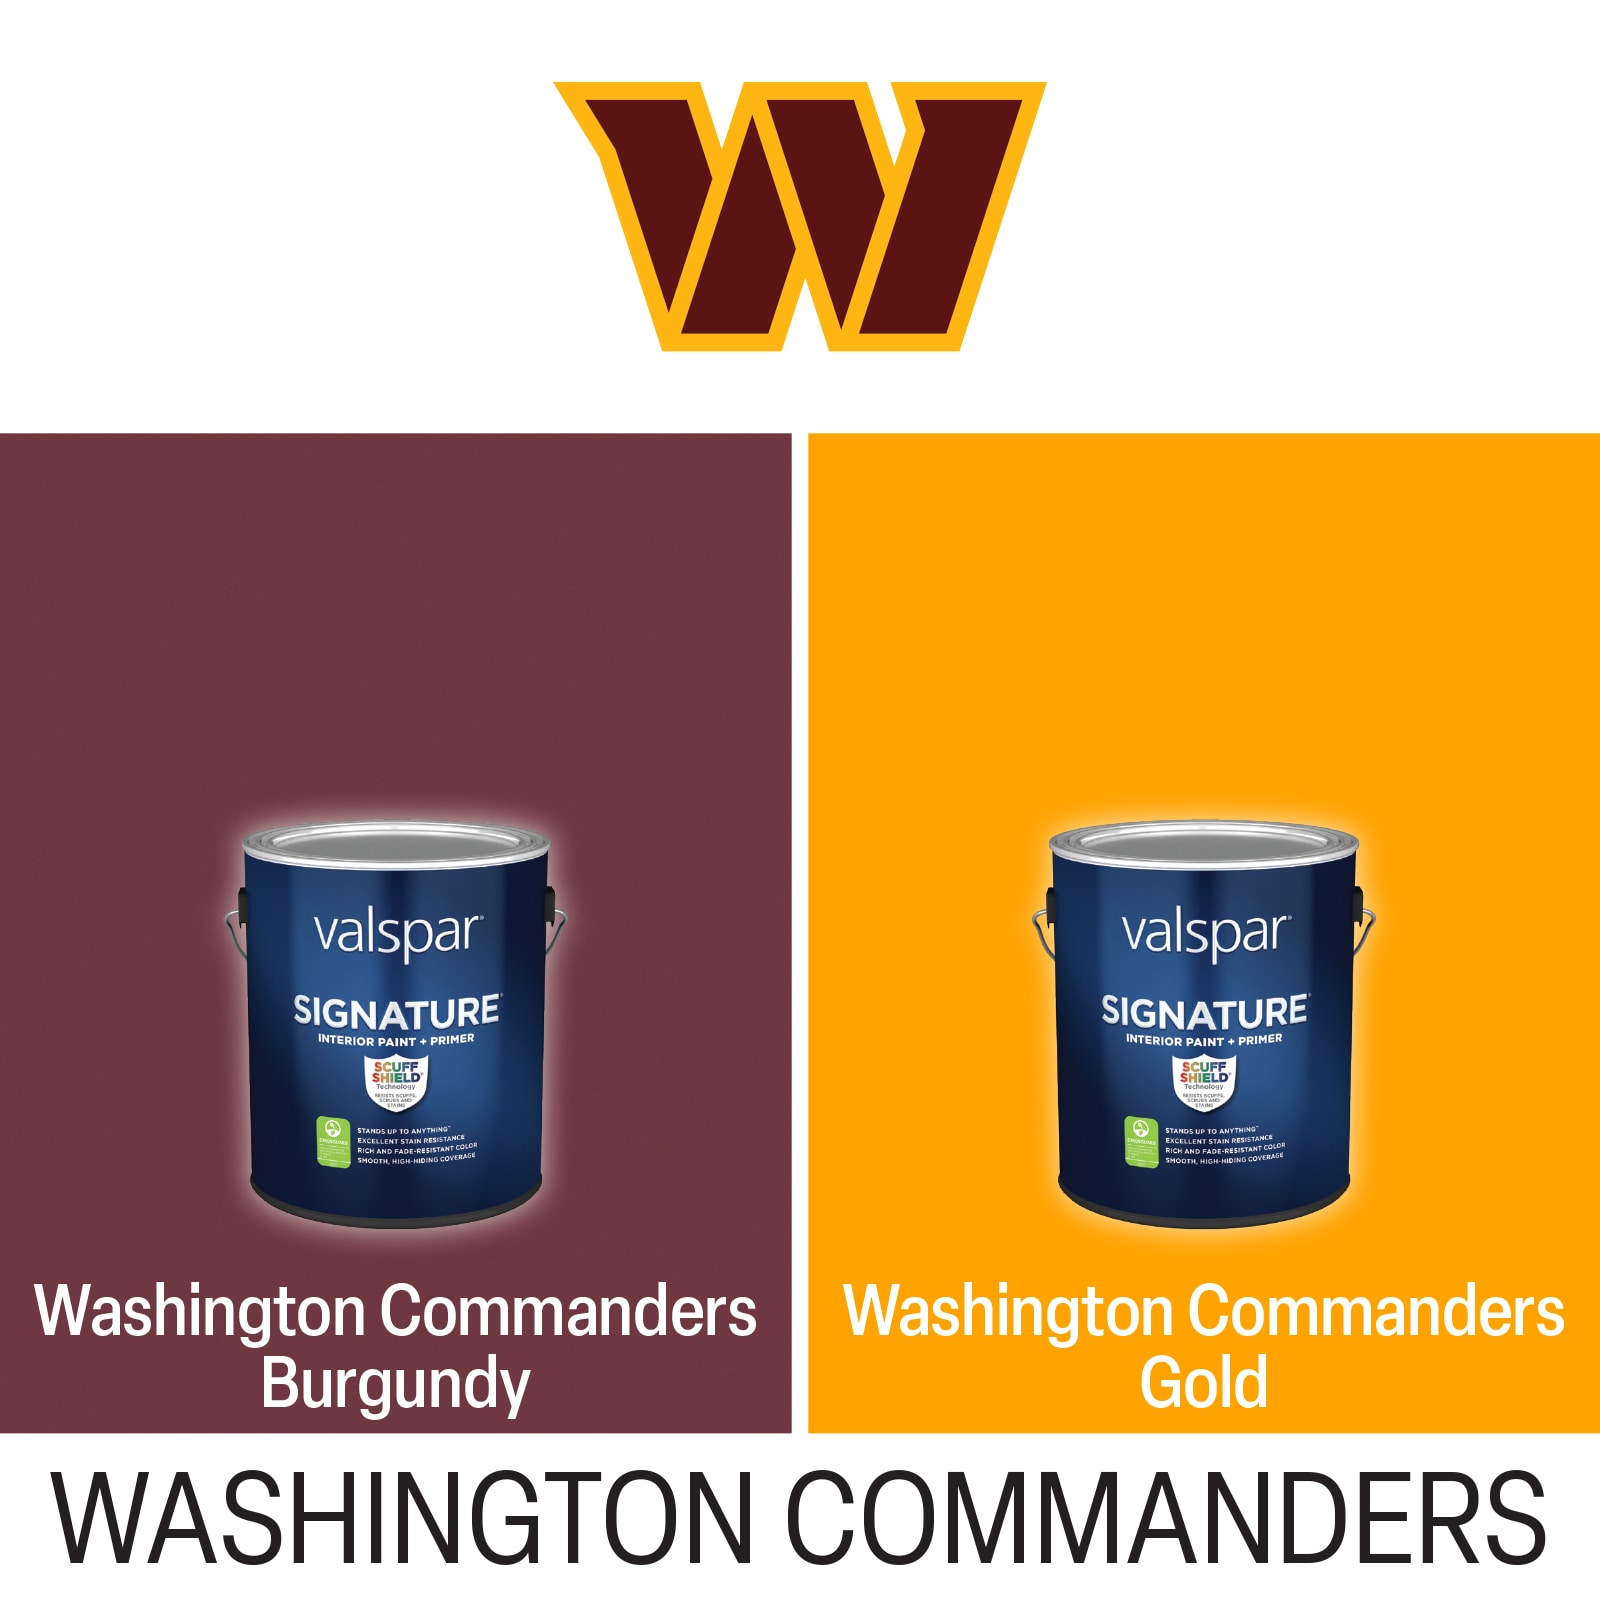 Buy Washington Commanders merchandise at the Washington Commanders